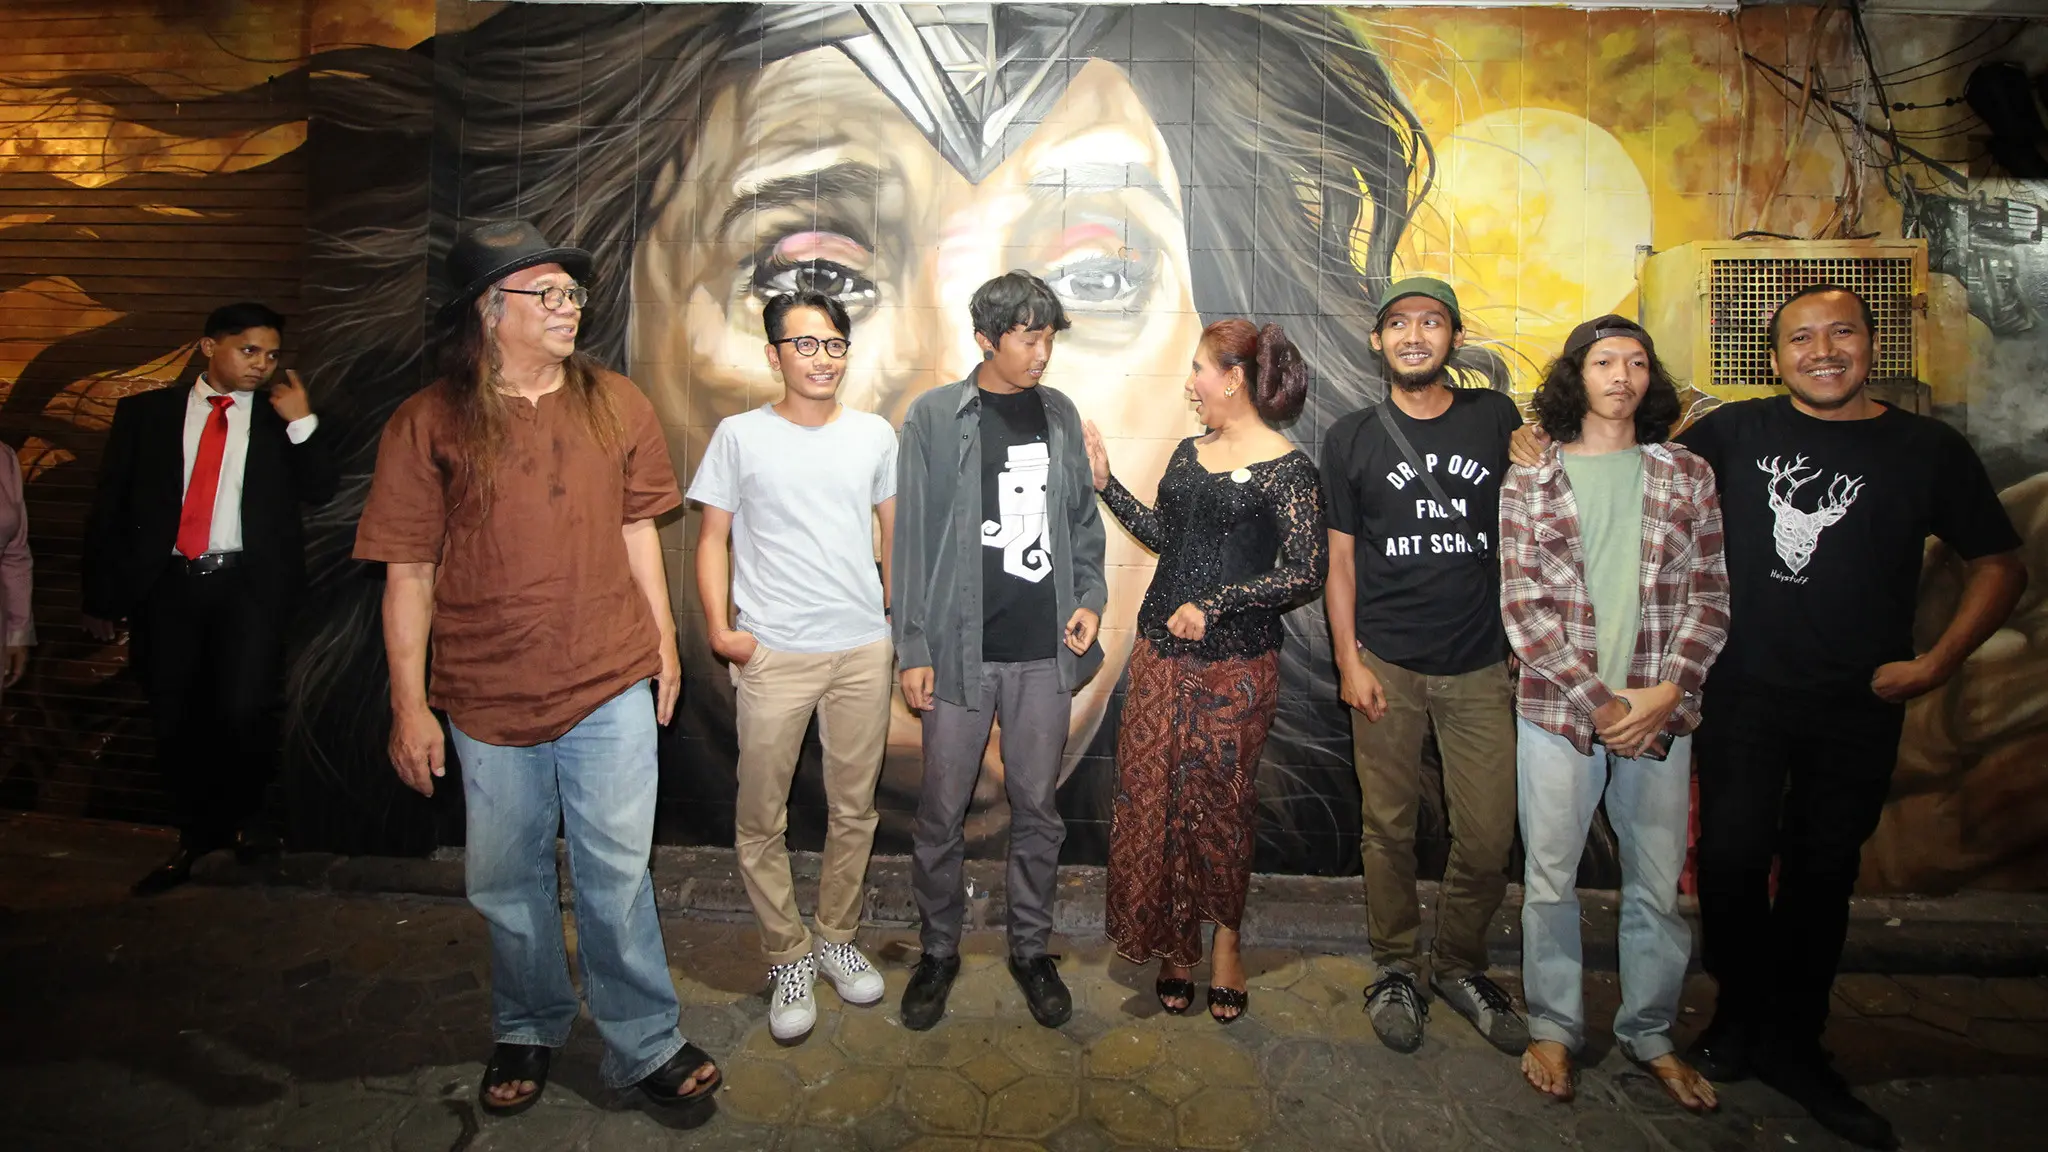 Menteri Susi Pudjiastuti bersama dengan para pelukis yang menggambar Susi Pudjiastuti bak Wonder Woman berpose di depan lukisan